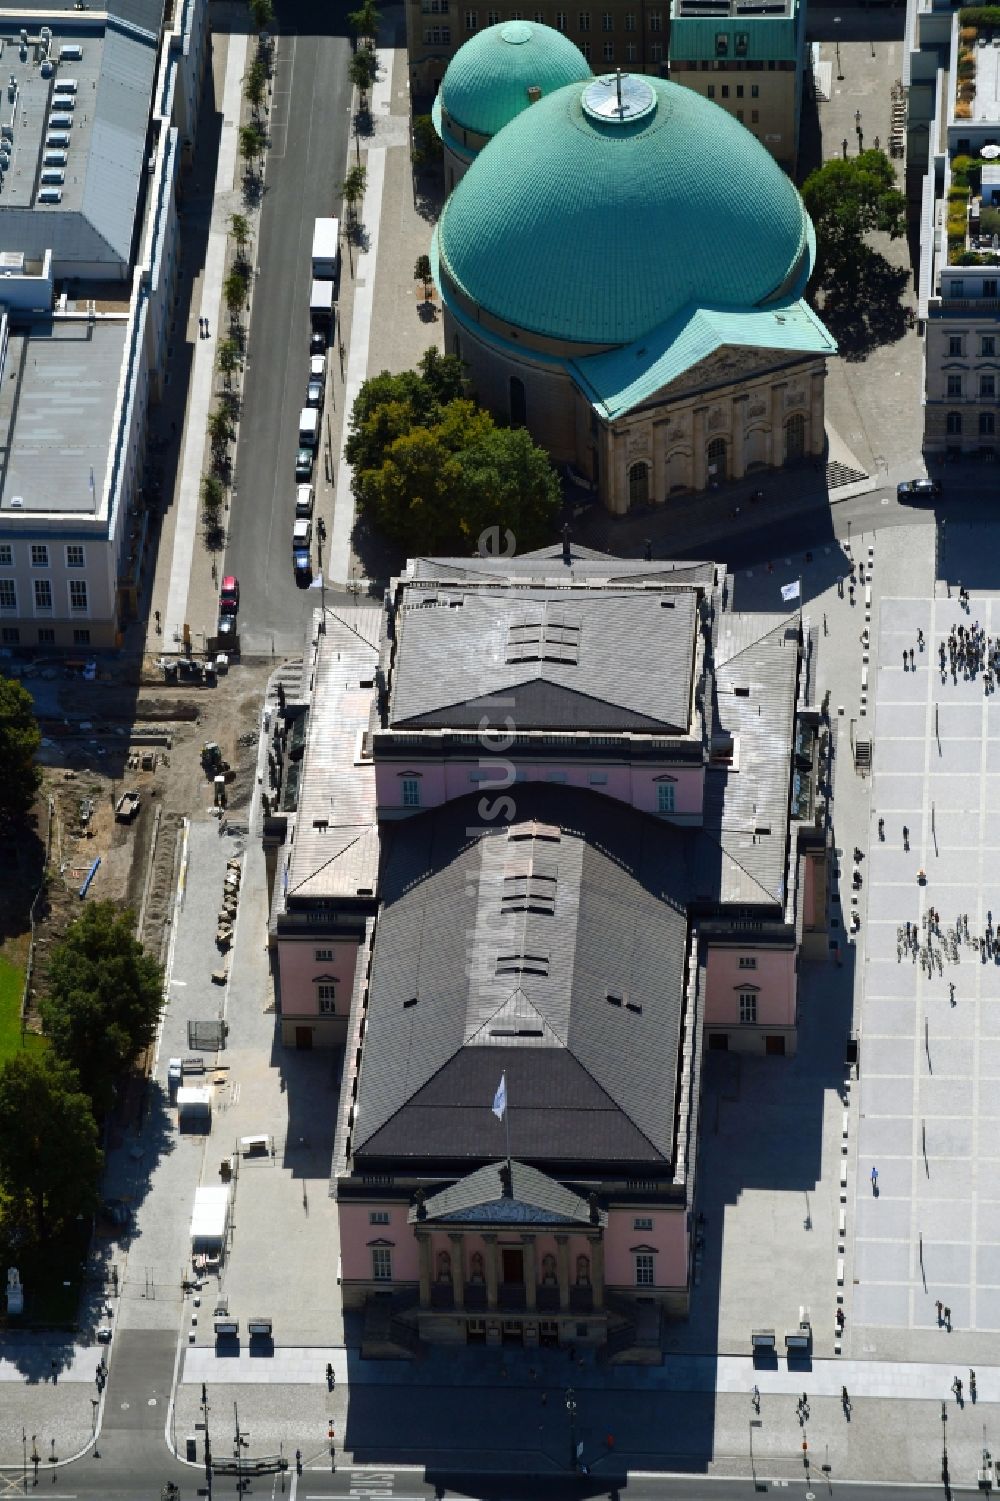 Luftbild Berlin - Gebäudes der Staatsoper Unter den Linden in Berlin Mitte am Bebelplatz